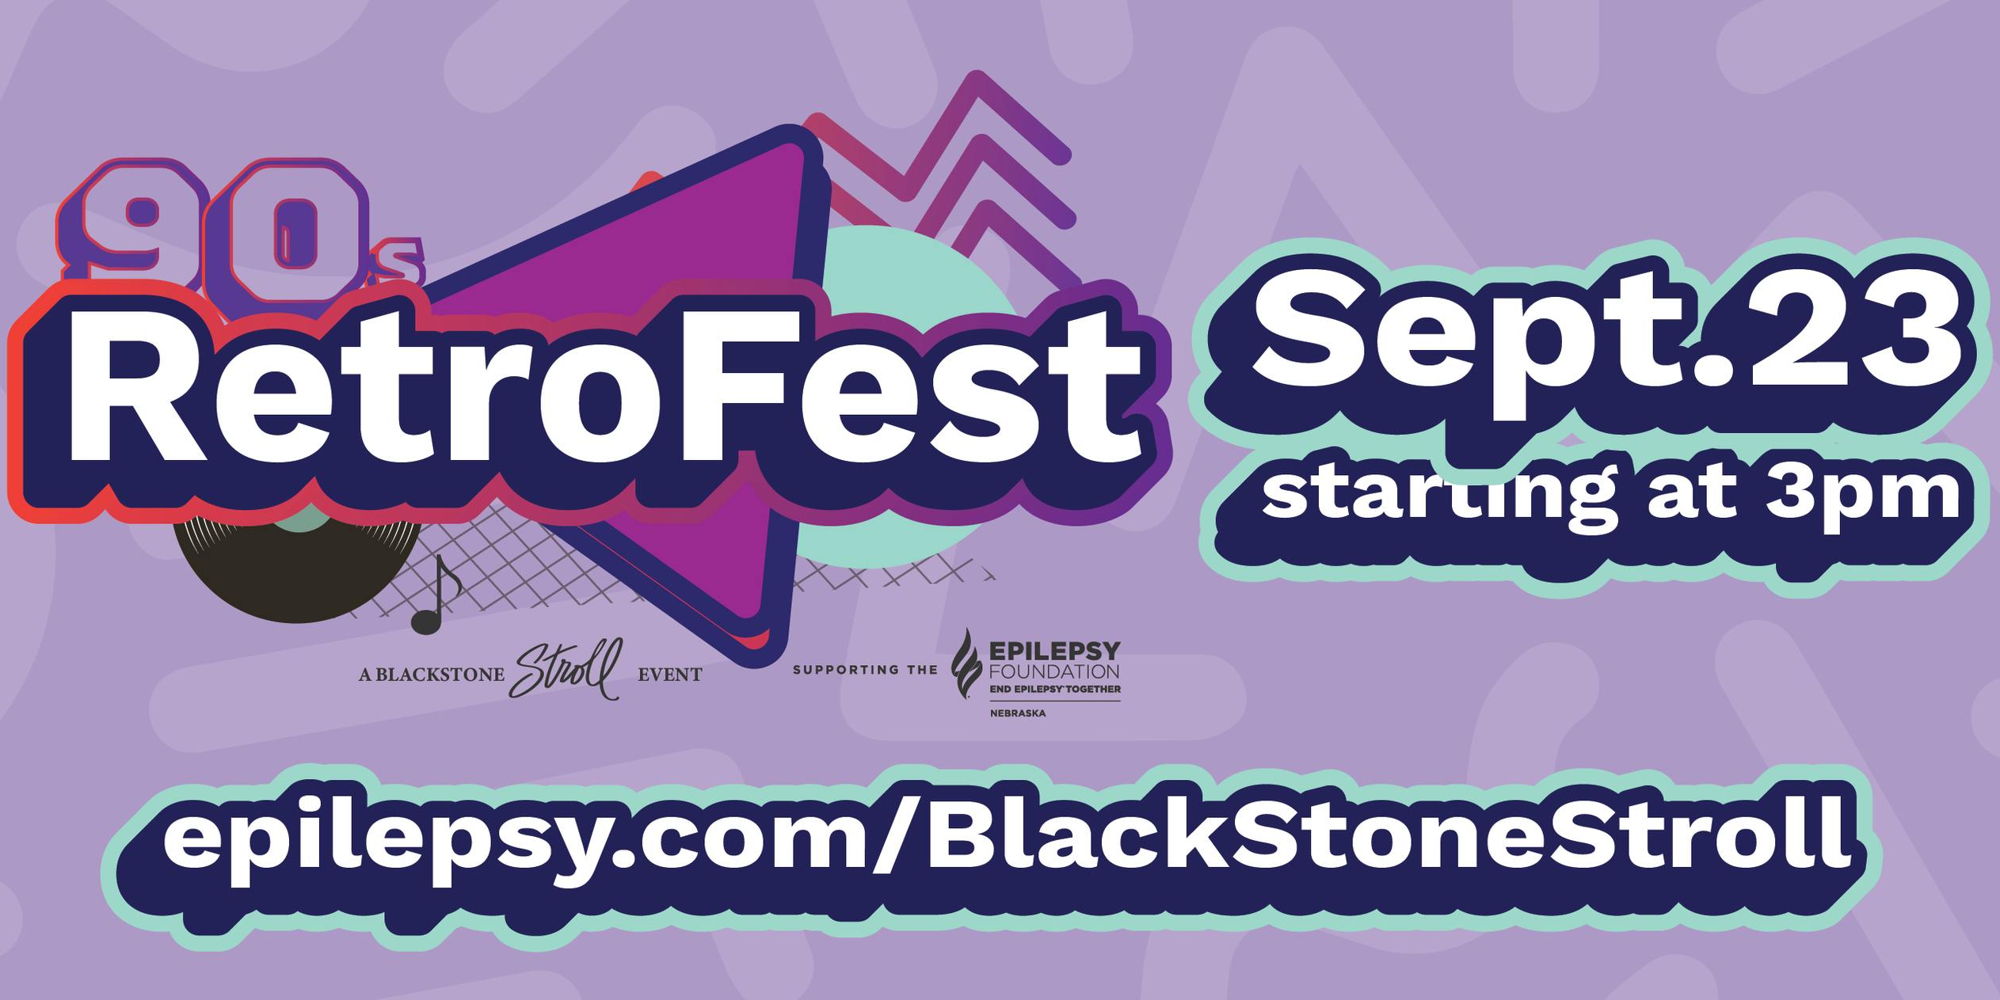 90s Retro Fest - A Blackstone Stroll Event promotional image